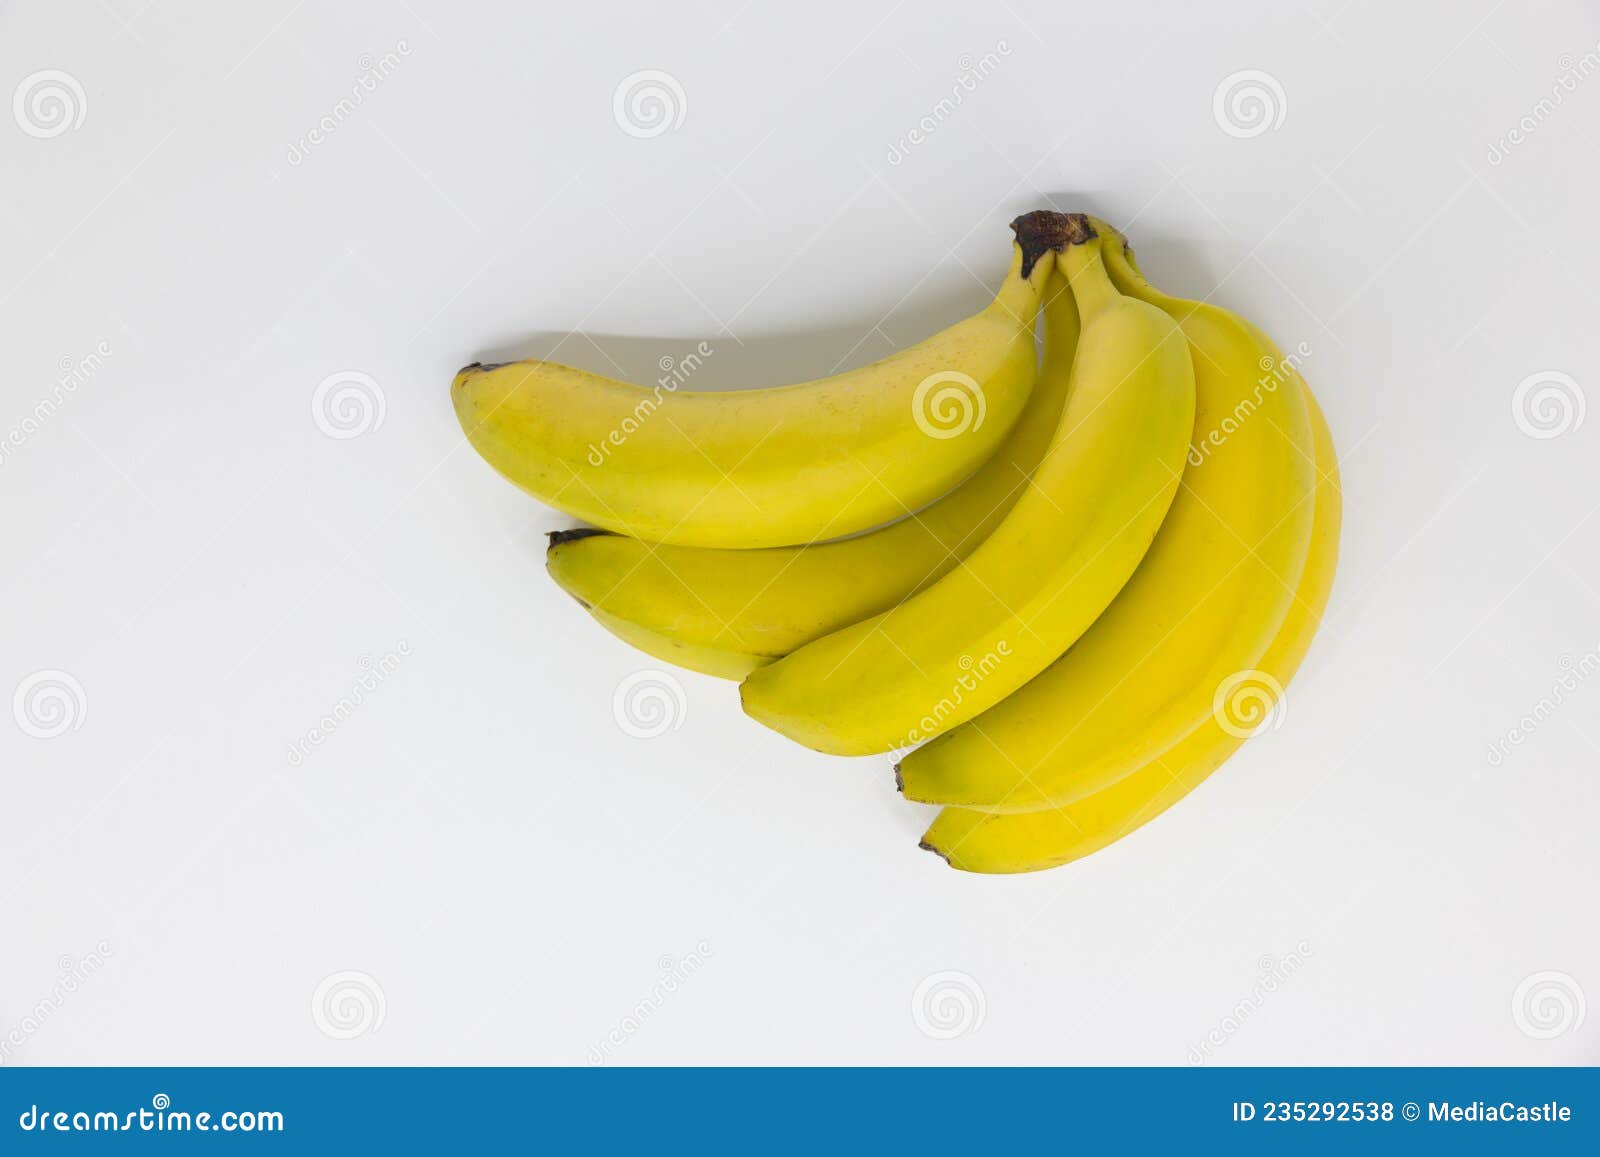 Banana bunch isolated on white background.Ripe bananas bunch iso